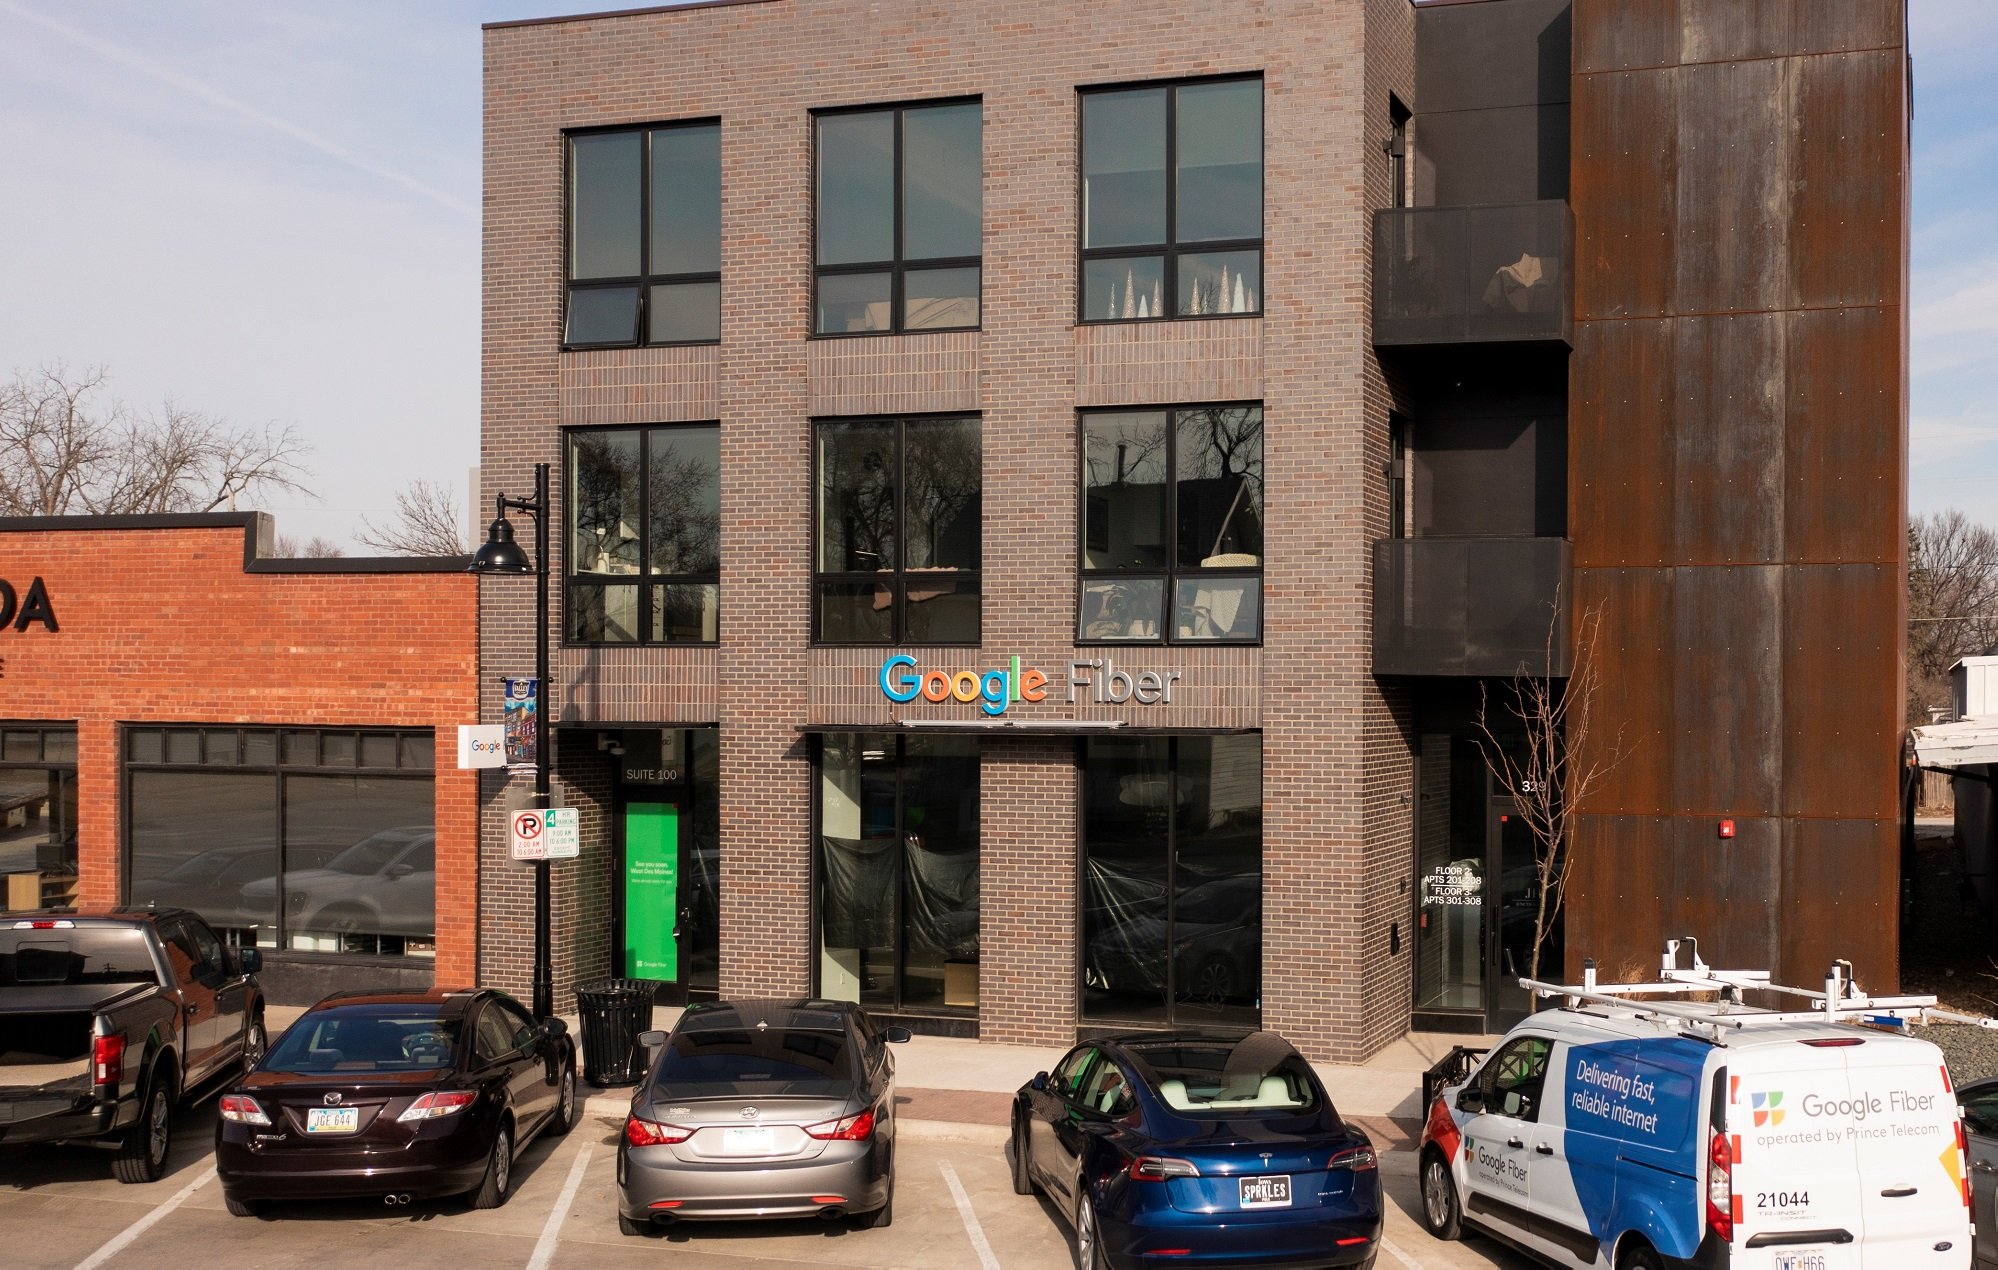 Google fiber office building